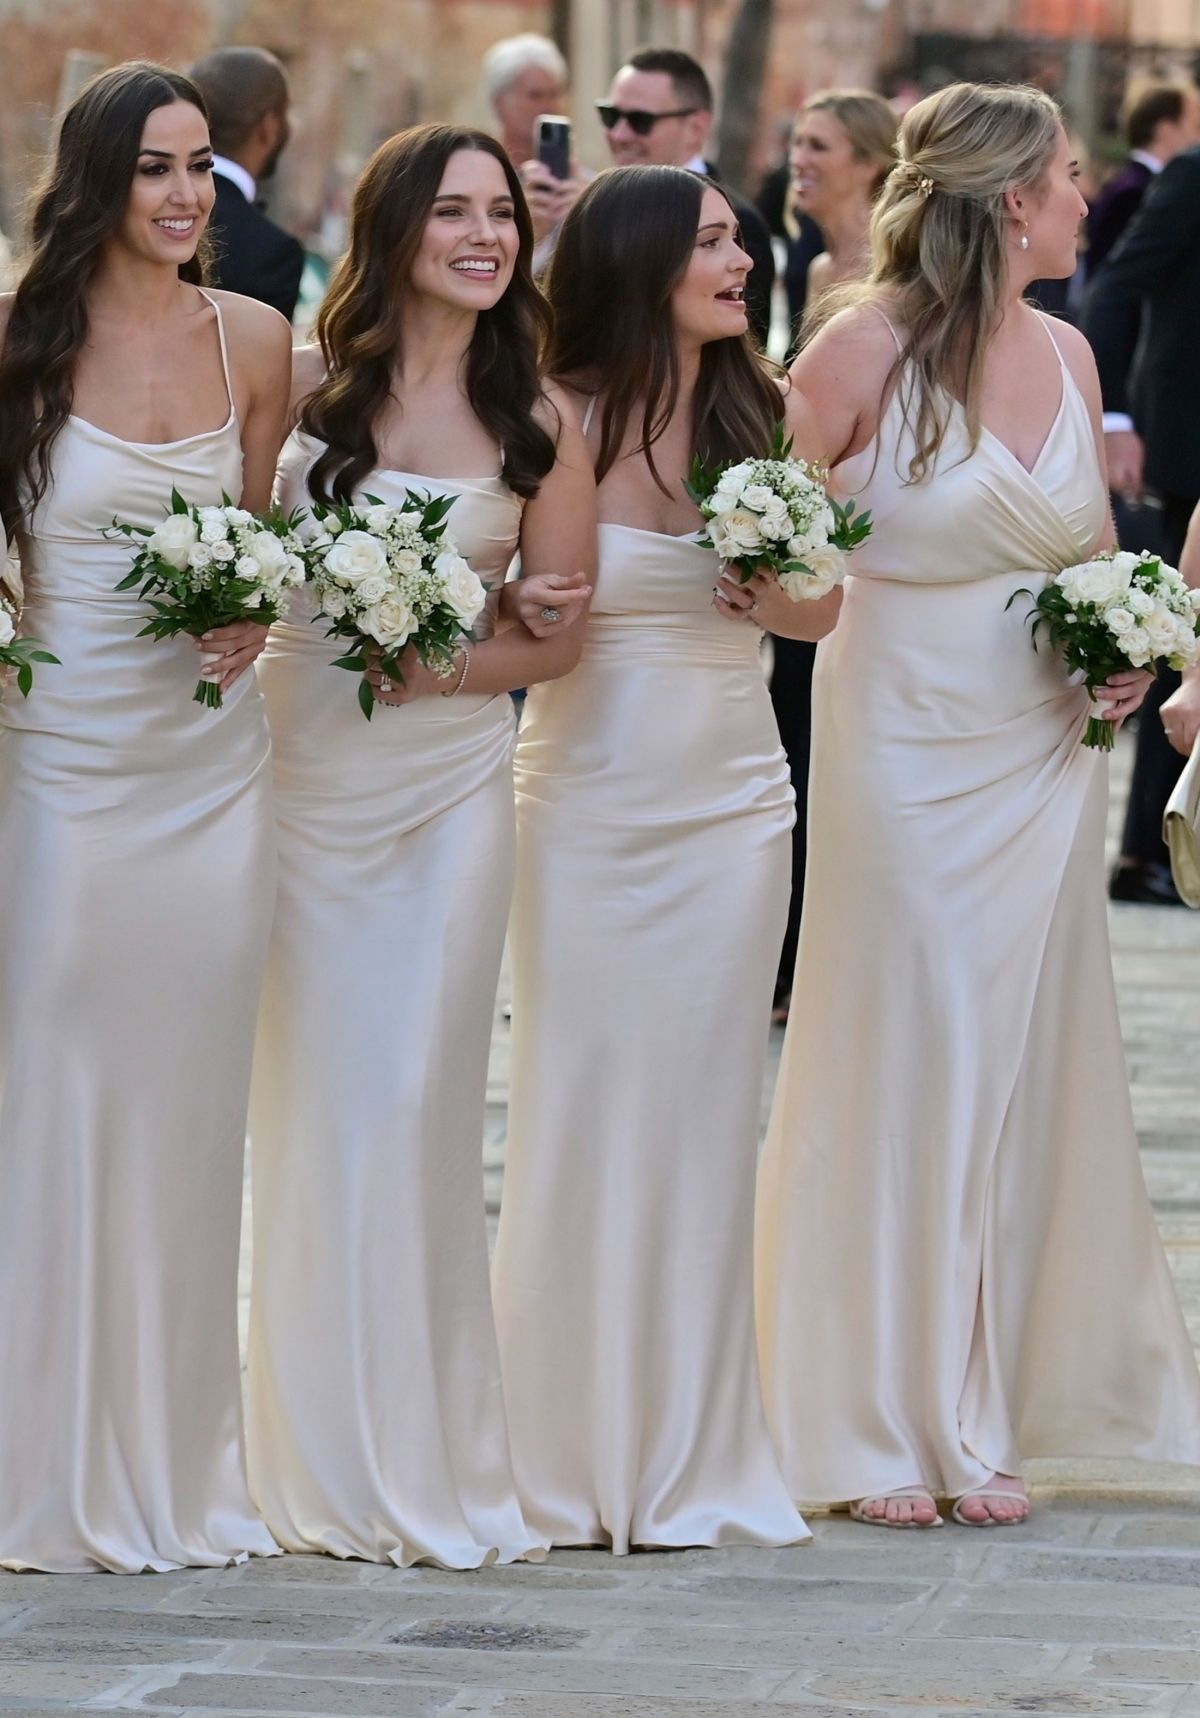 SOPHIA BUSH at a Friend’s Wedding in Italy 10/04/2022.